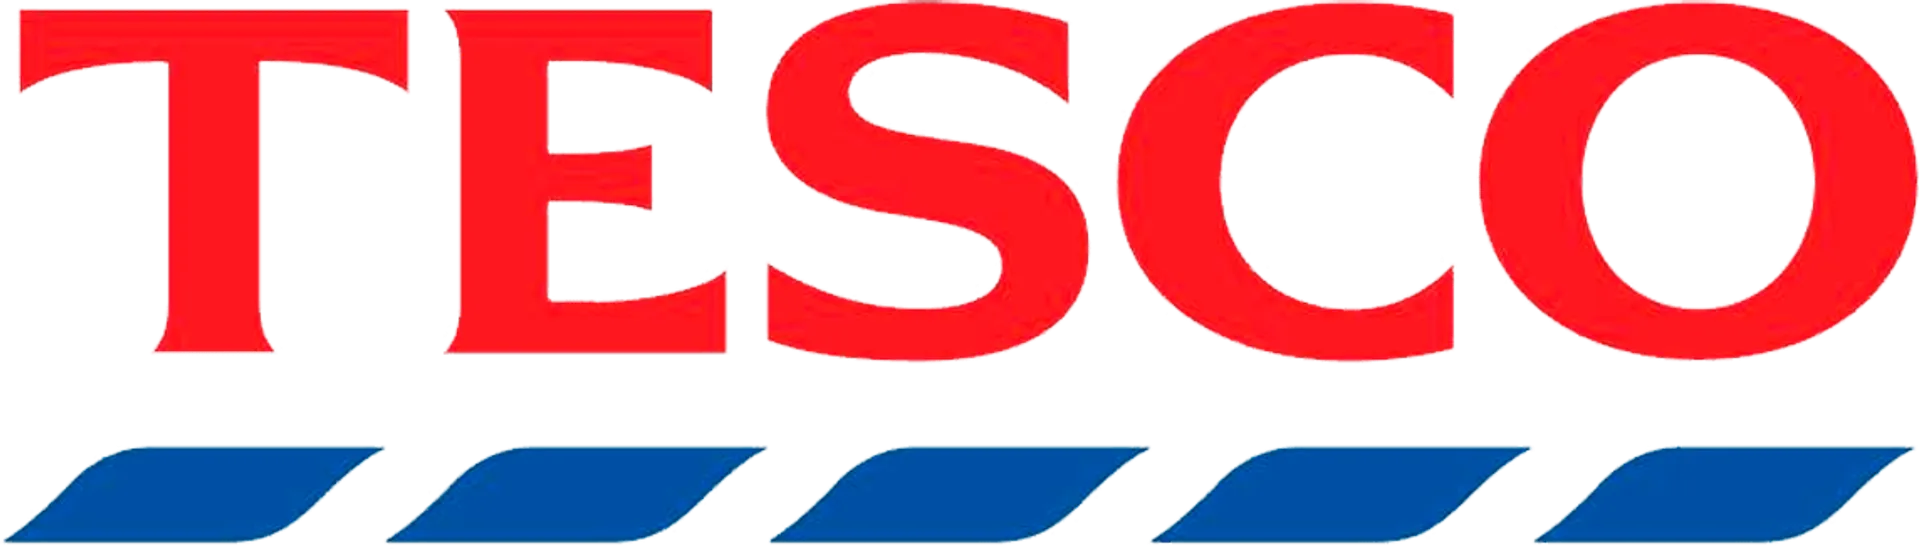 TESCO logo of current flyer